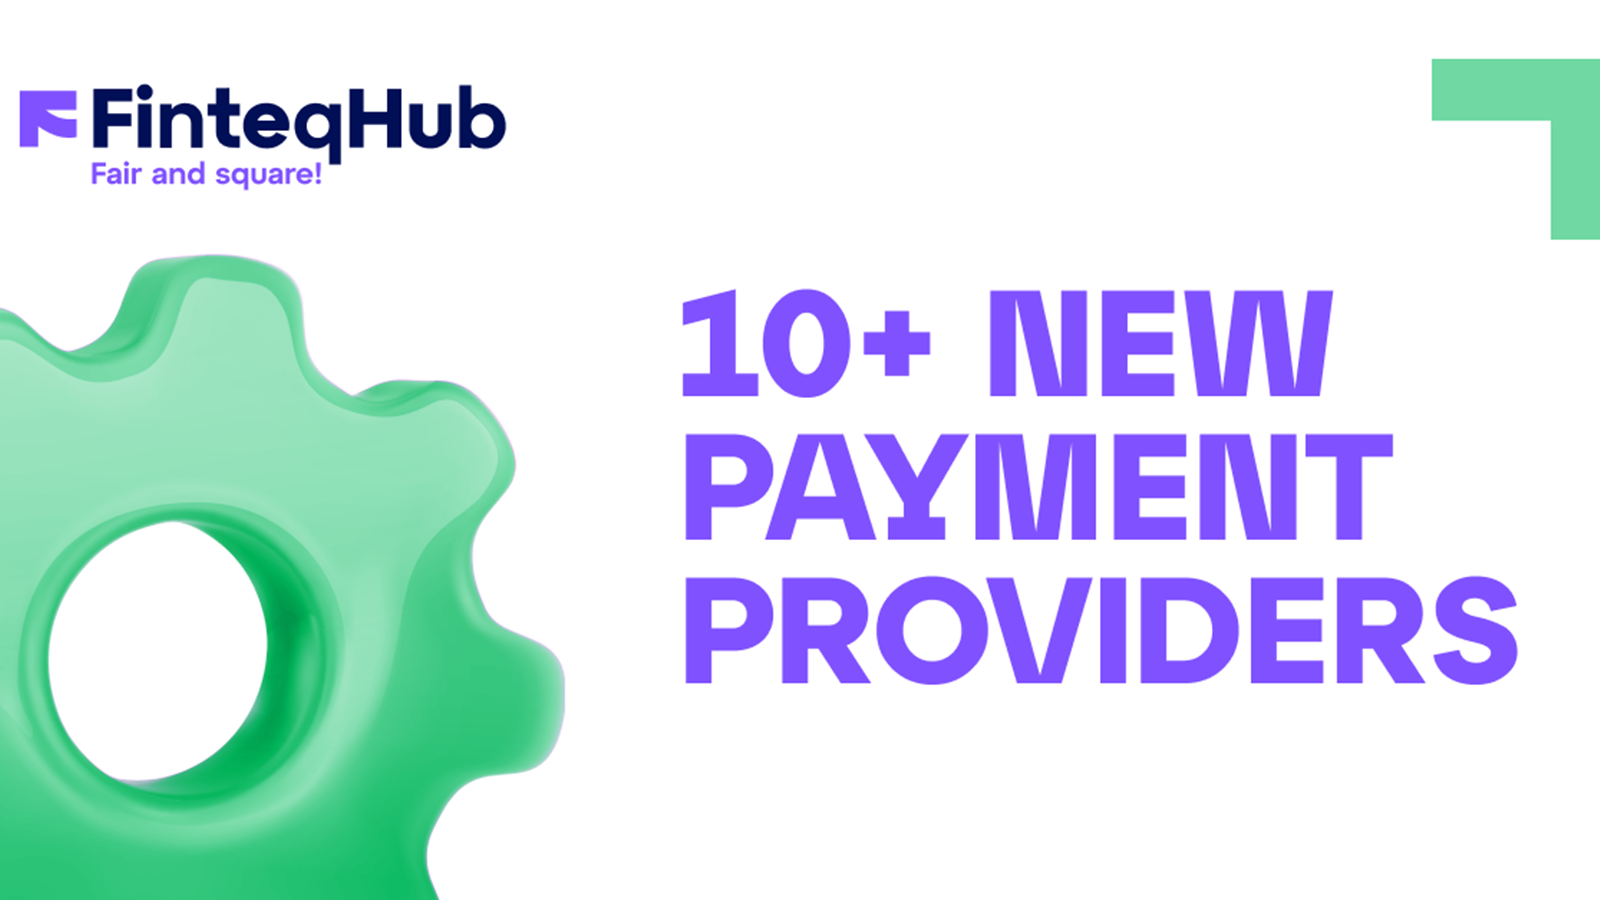 FinteqHub's Global Payment Transformation